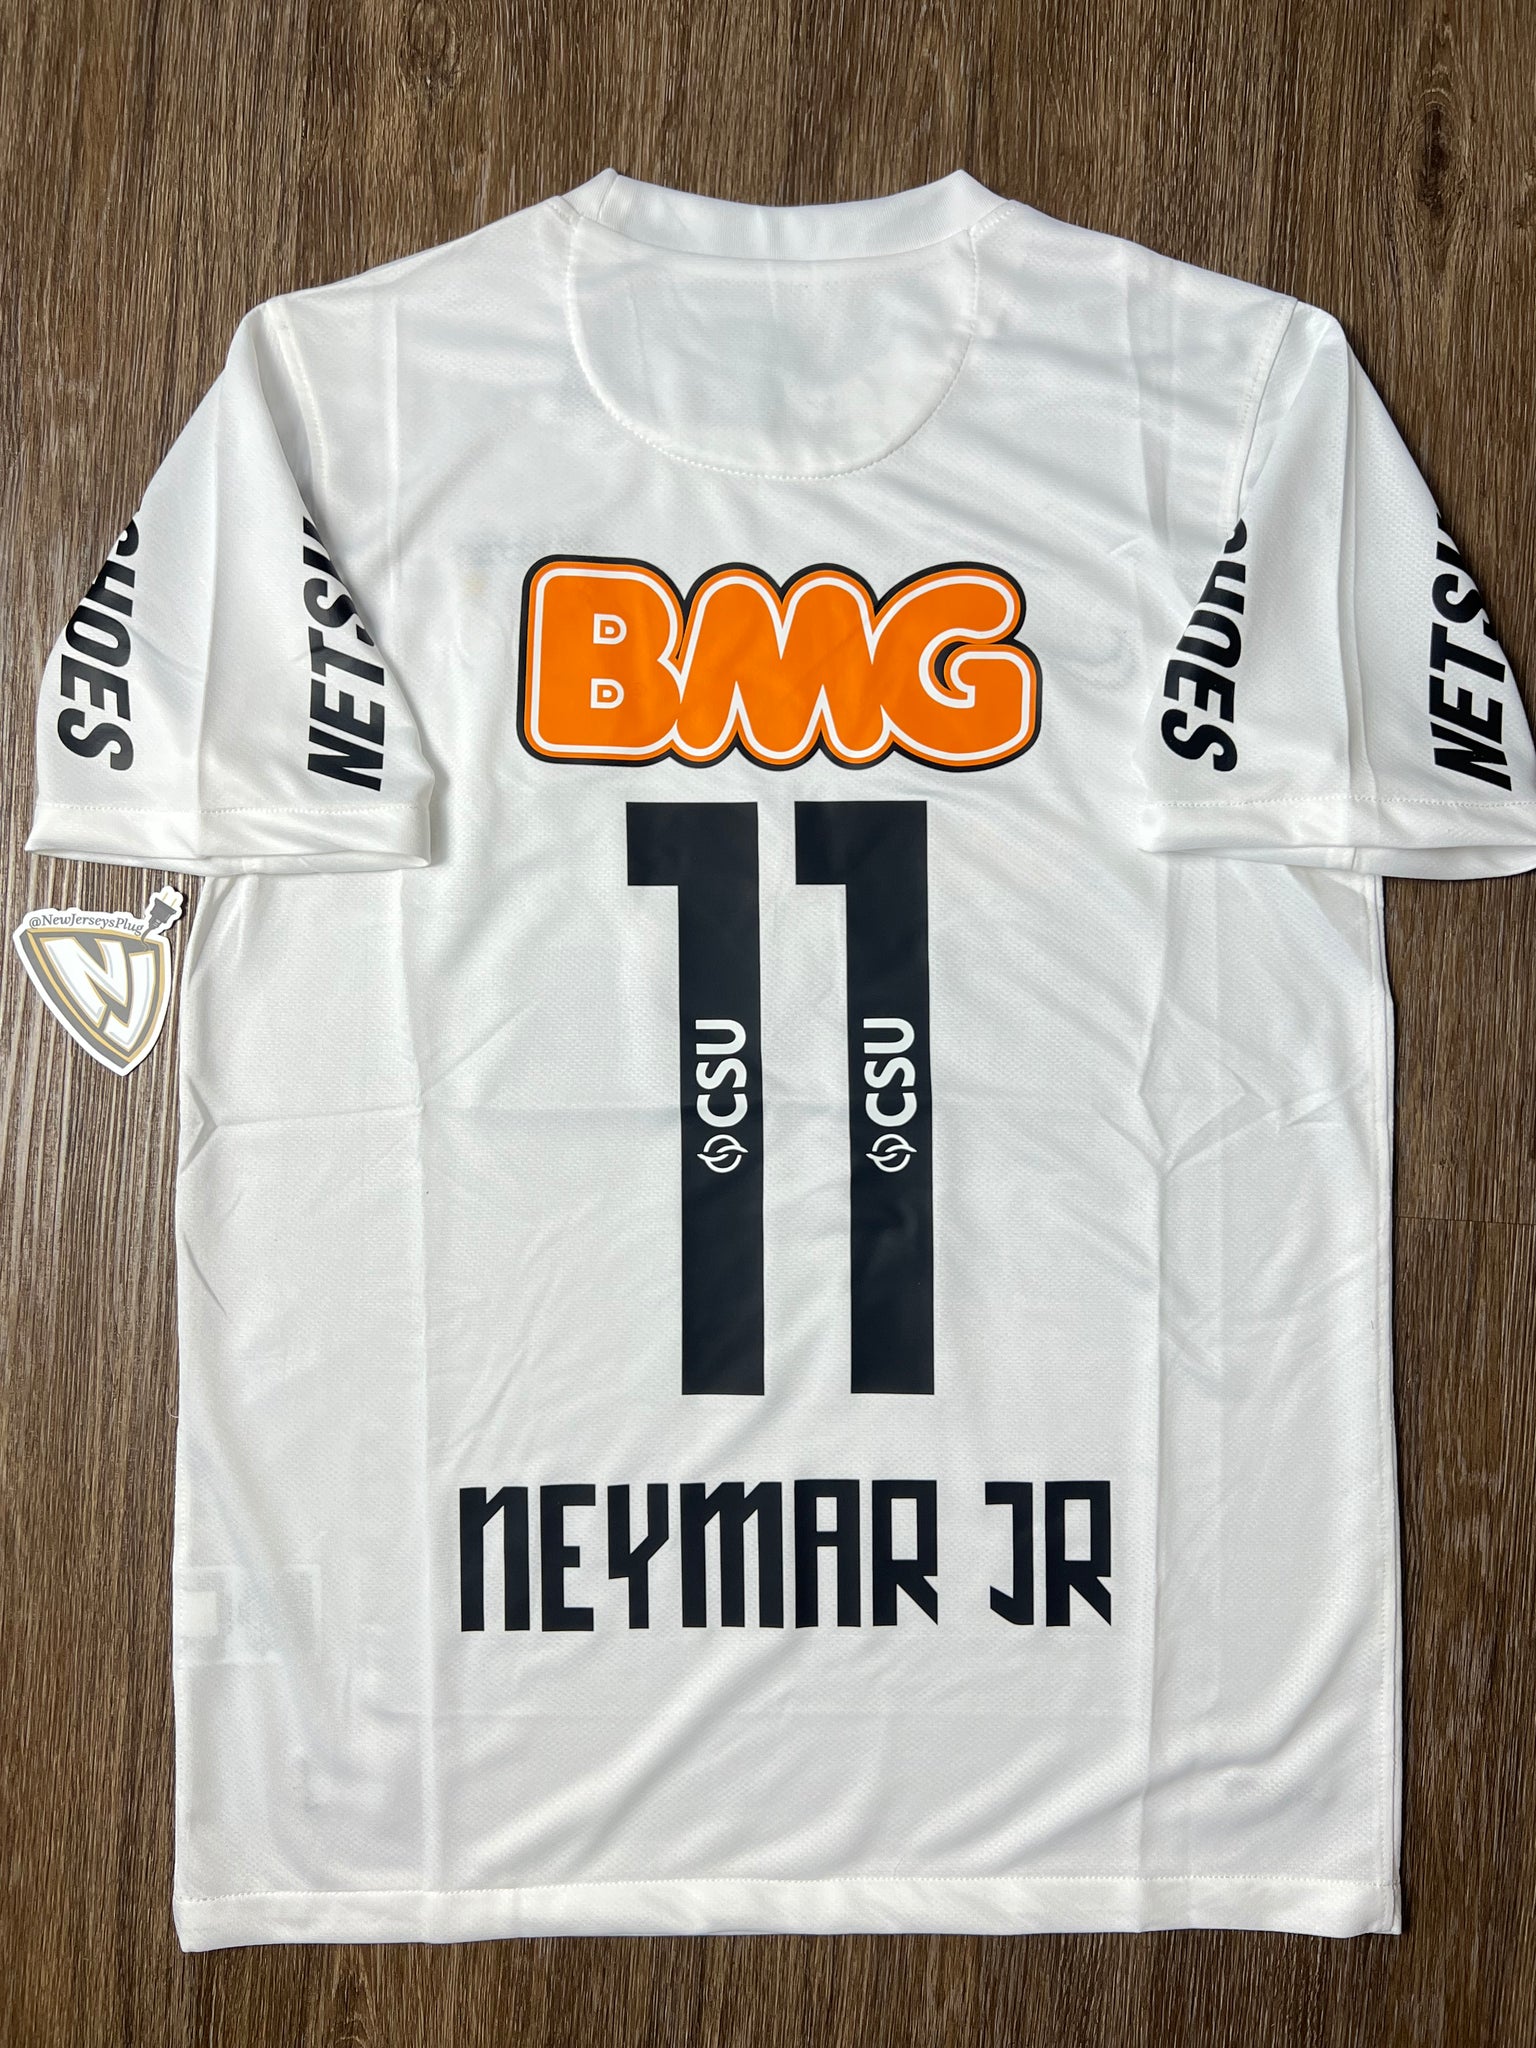 Santos Neymar Jr Home Jersey